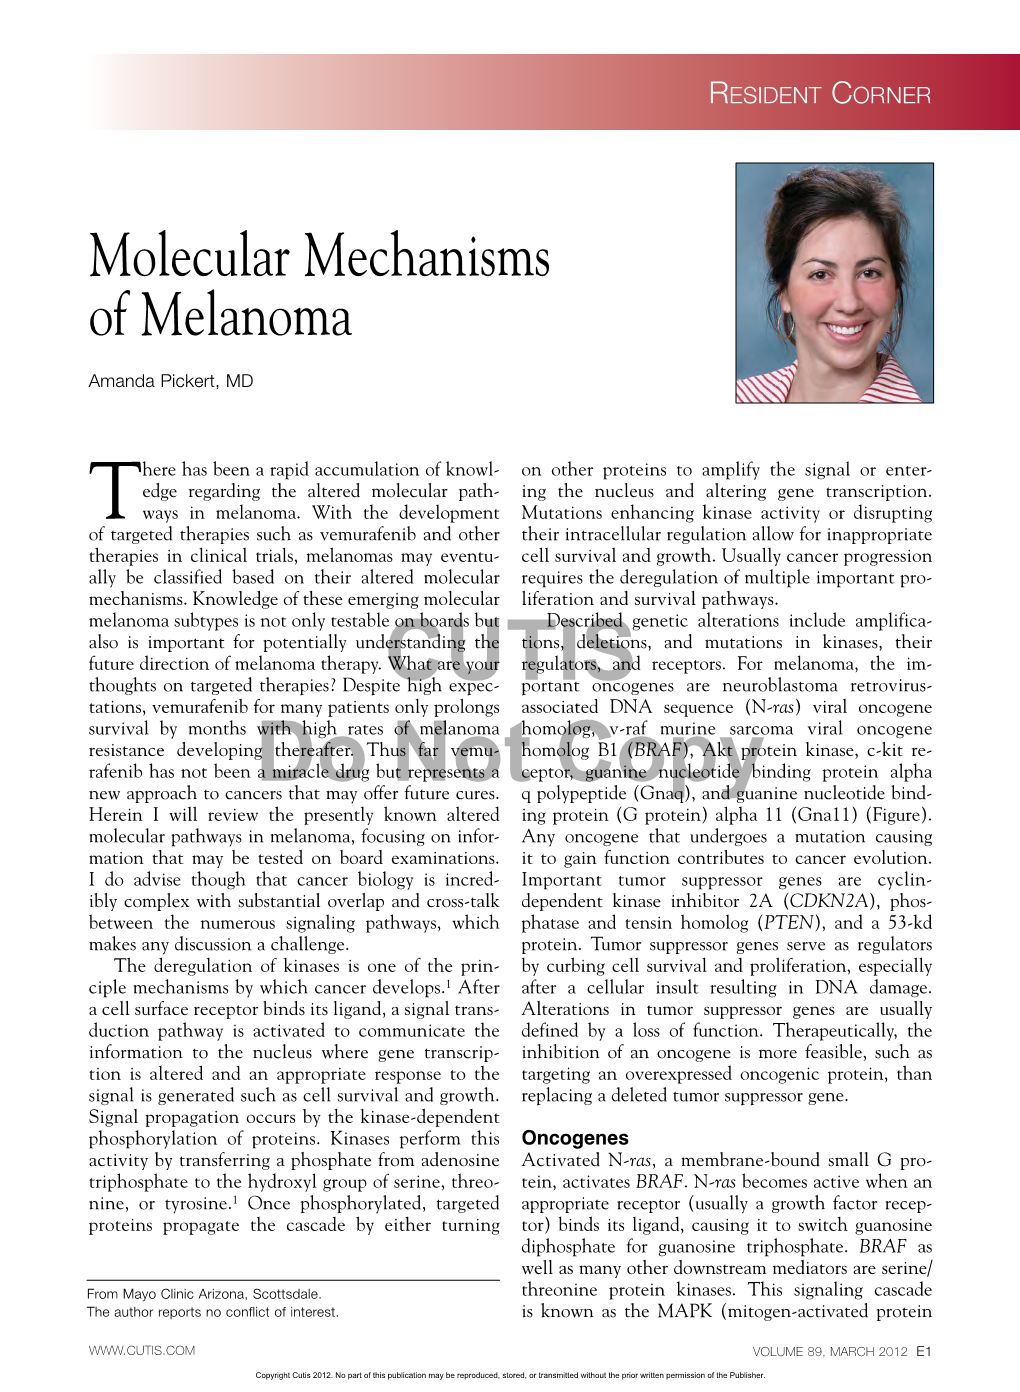 Molecular Mechanisms of Melanoma